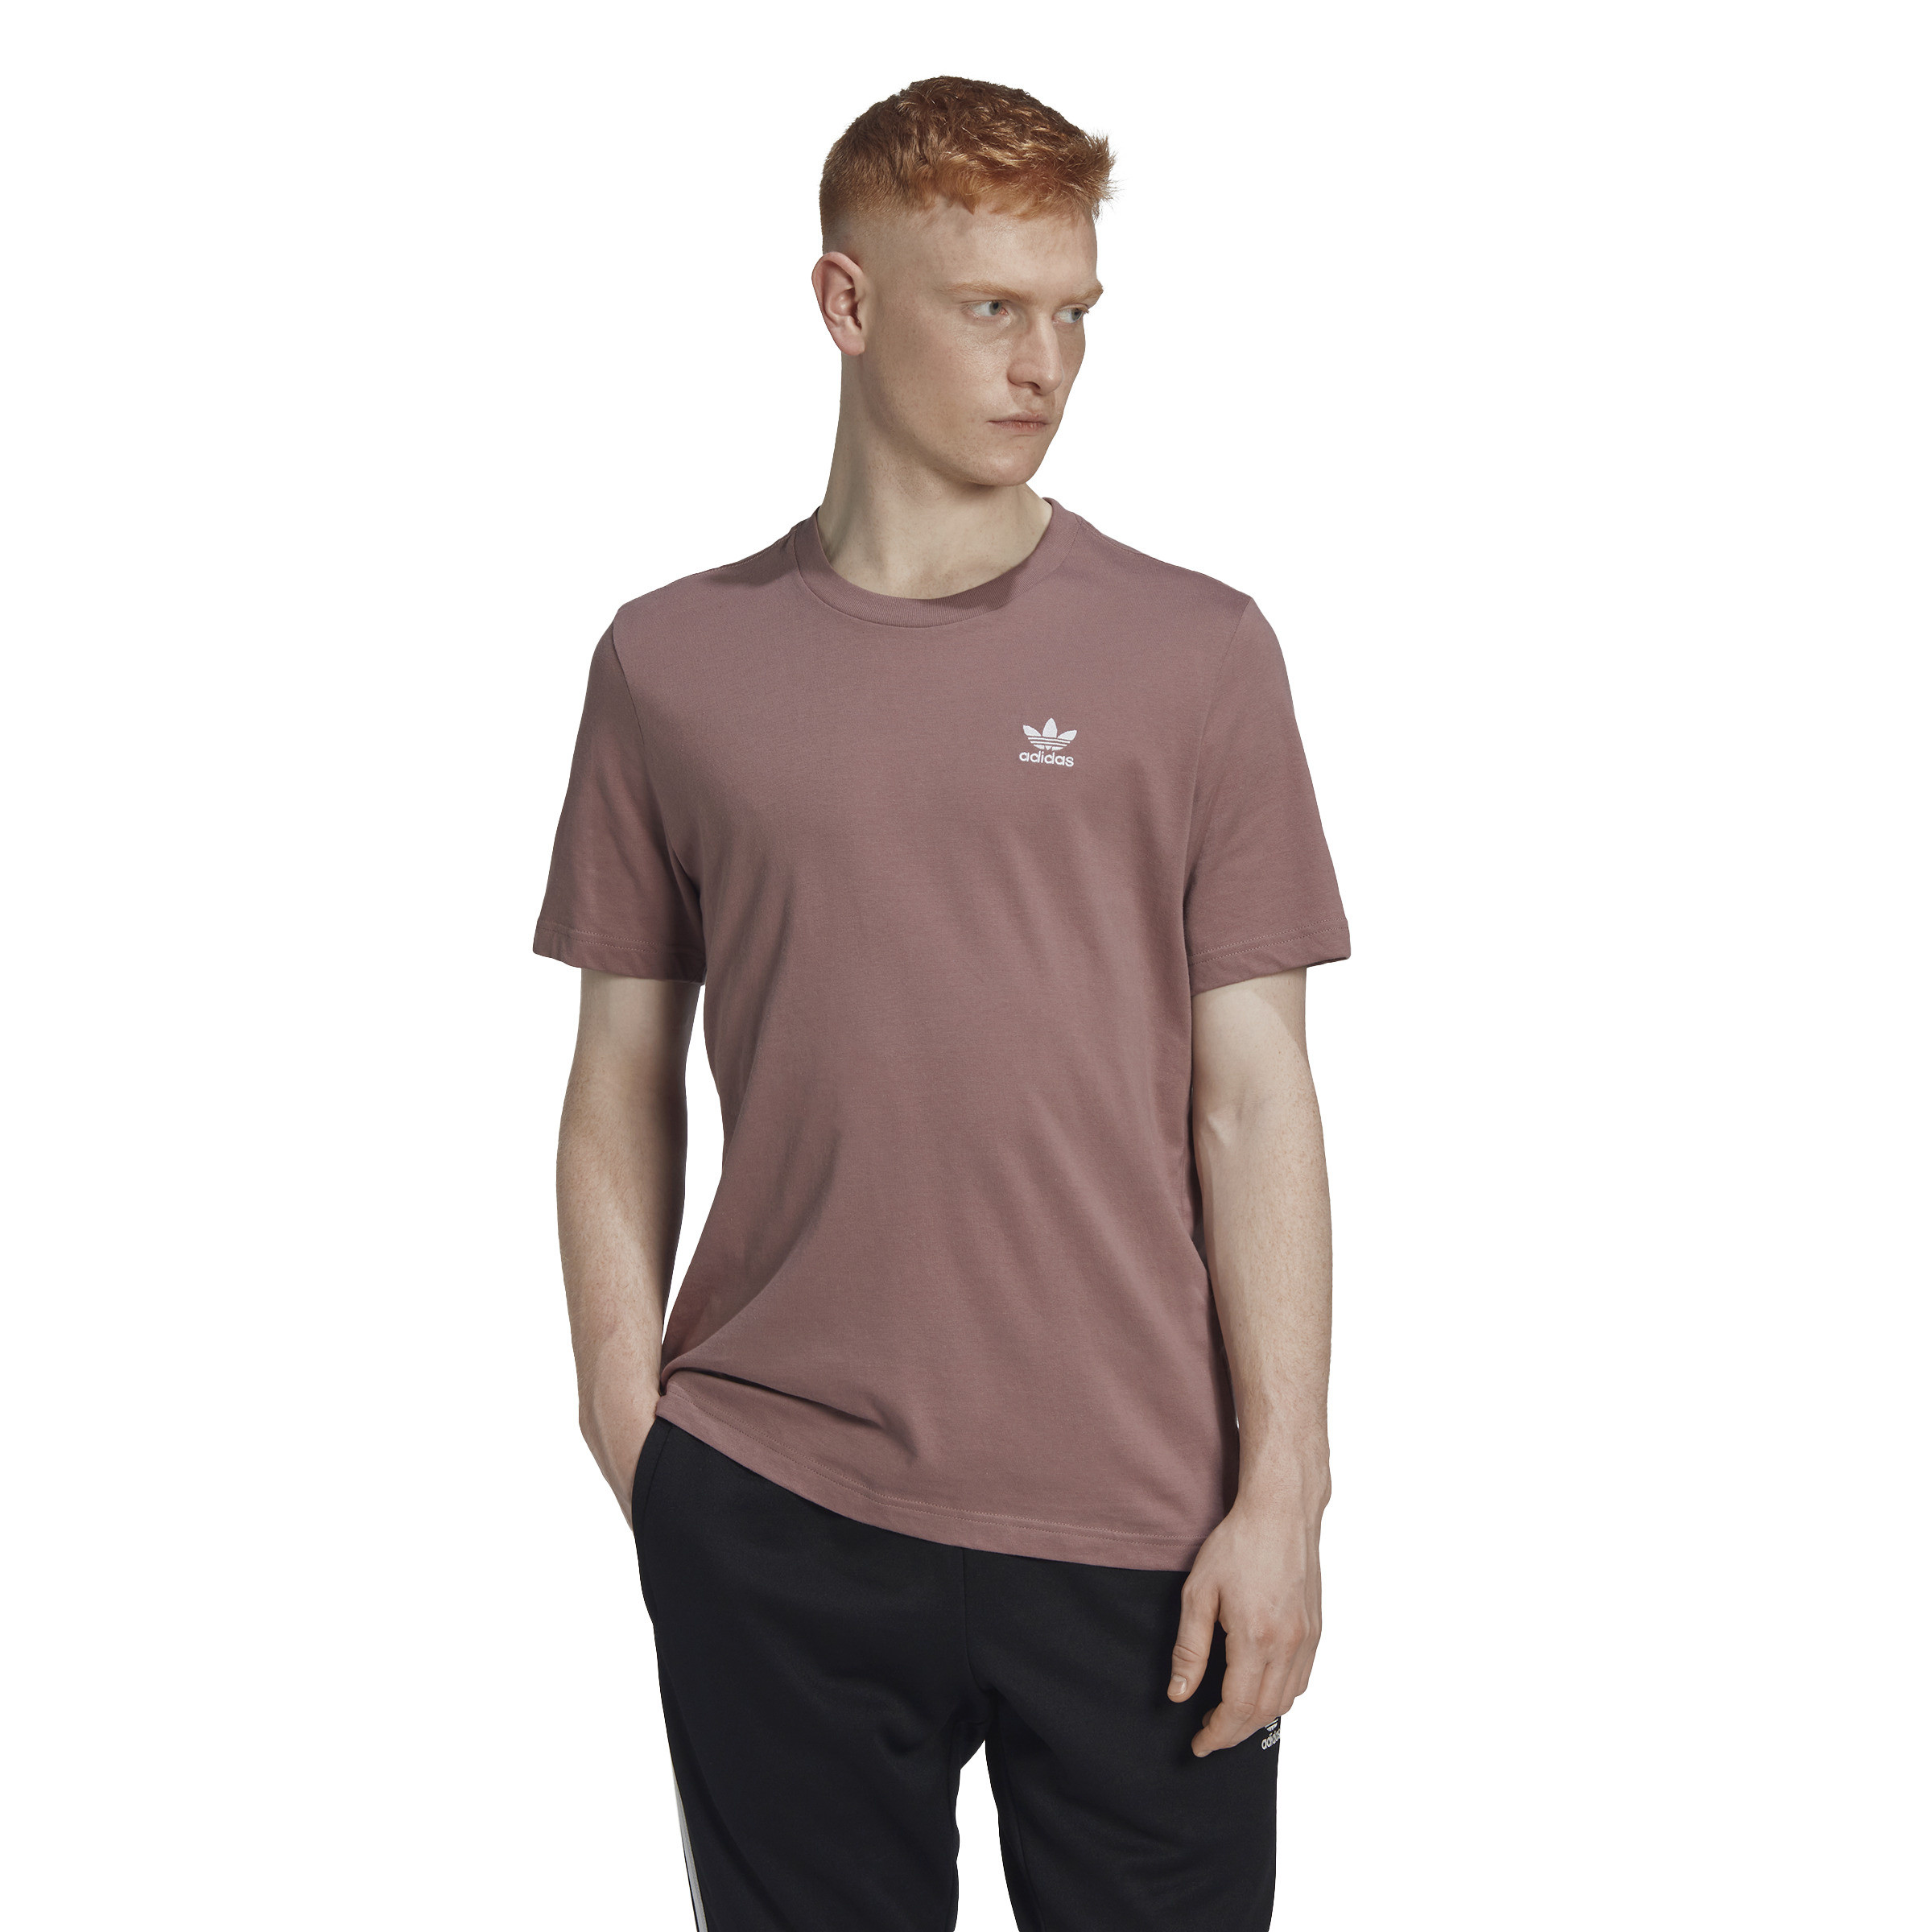 Adidas - Crewneck T-shirt with logo, Antique Pink, large image number 4